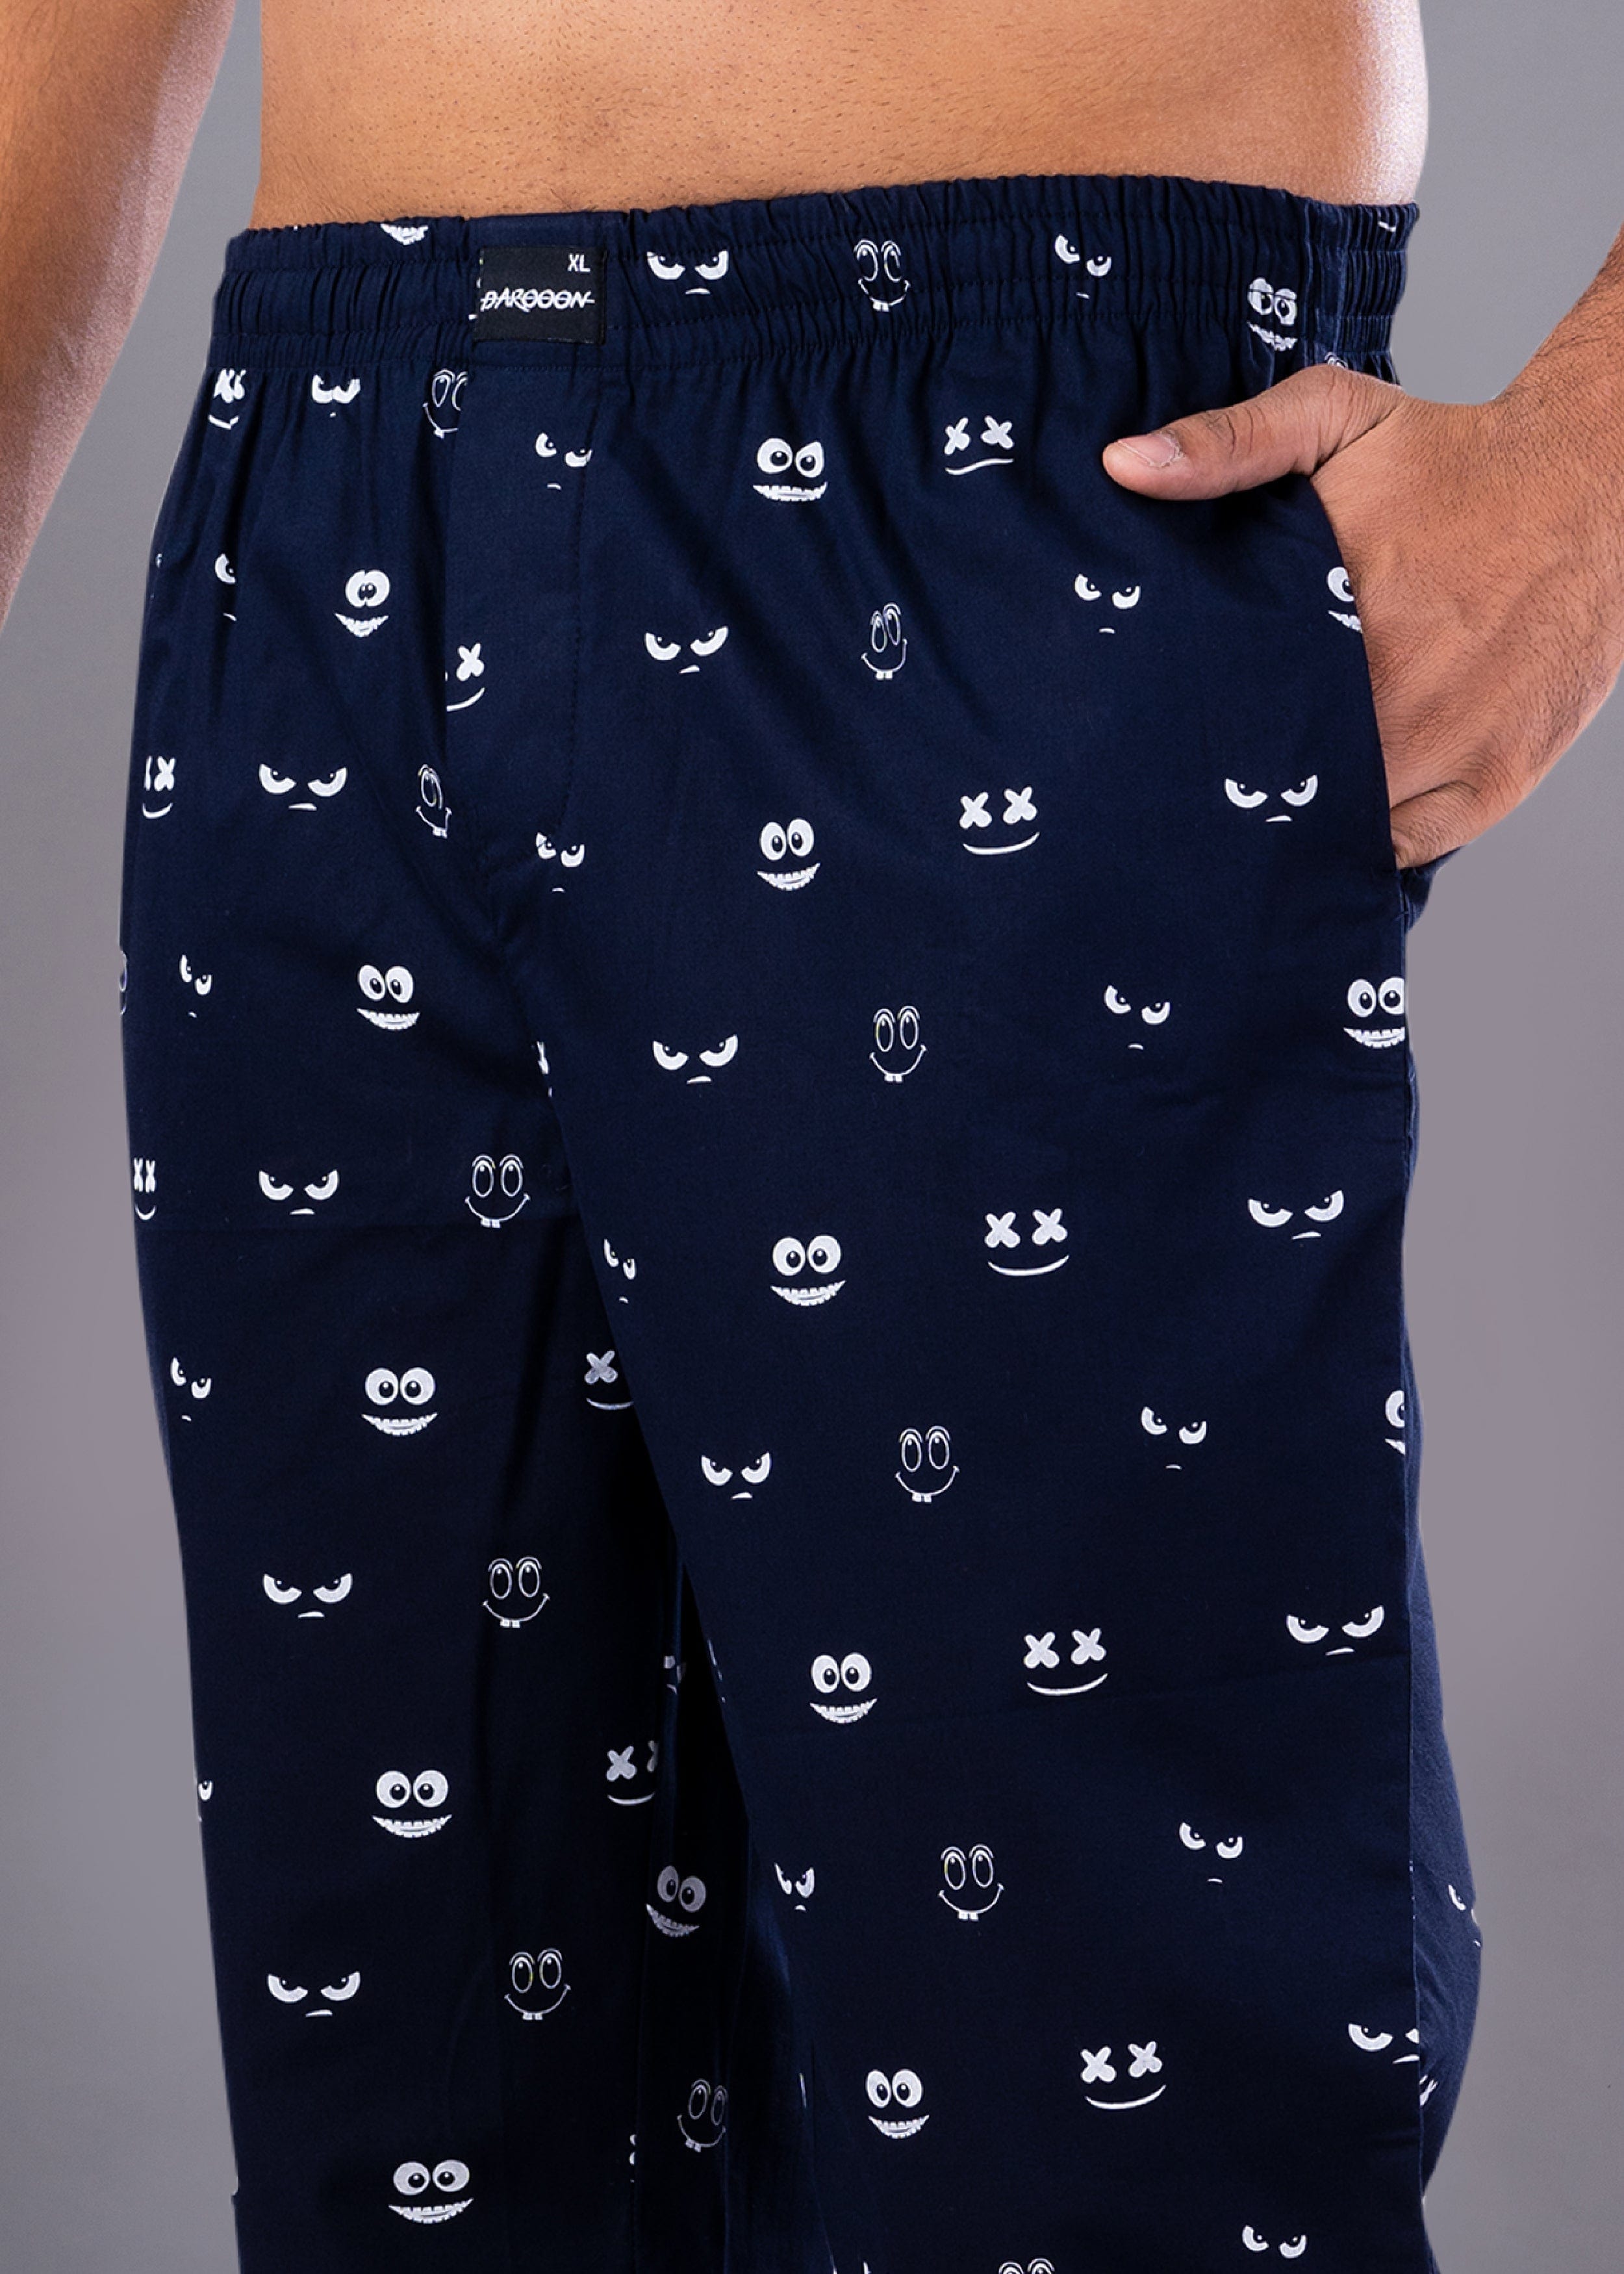 Cartoon Face Printed Navy Blue Cotton Pyjama For Men